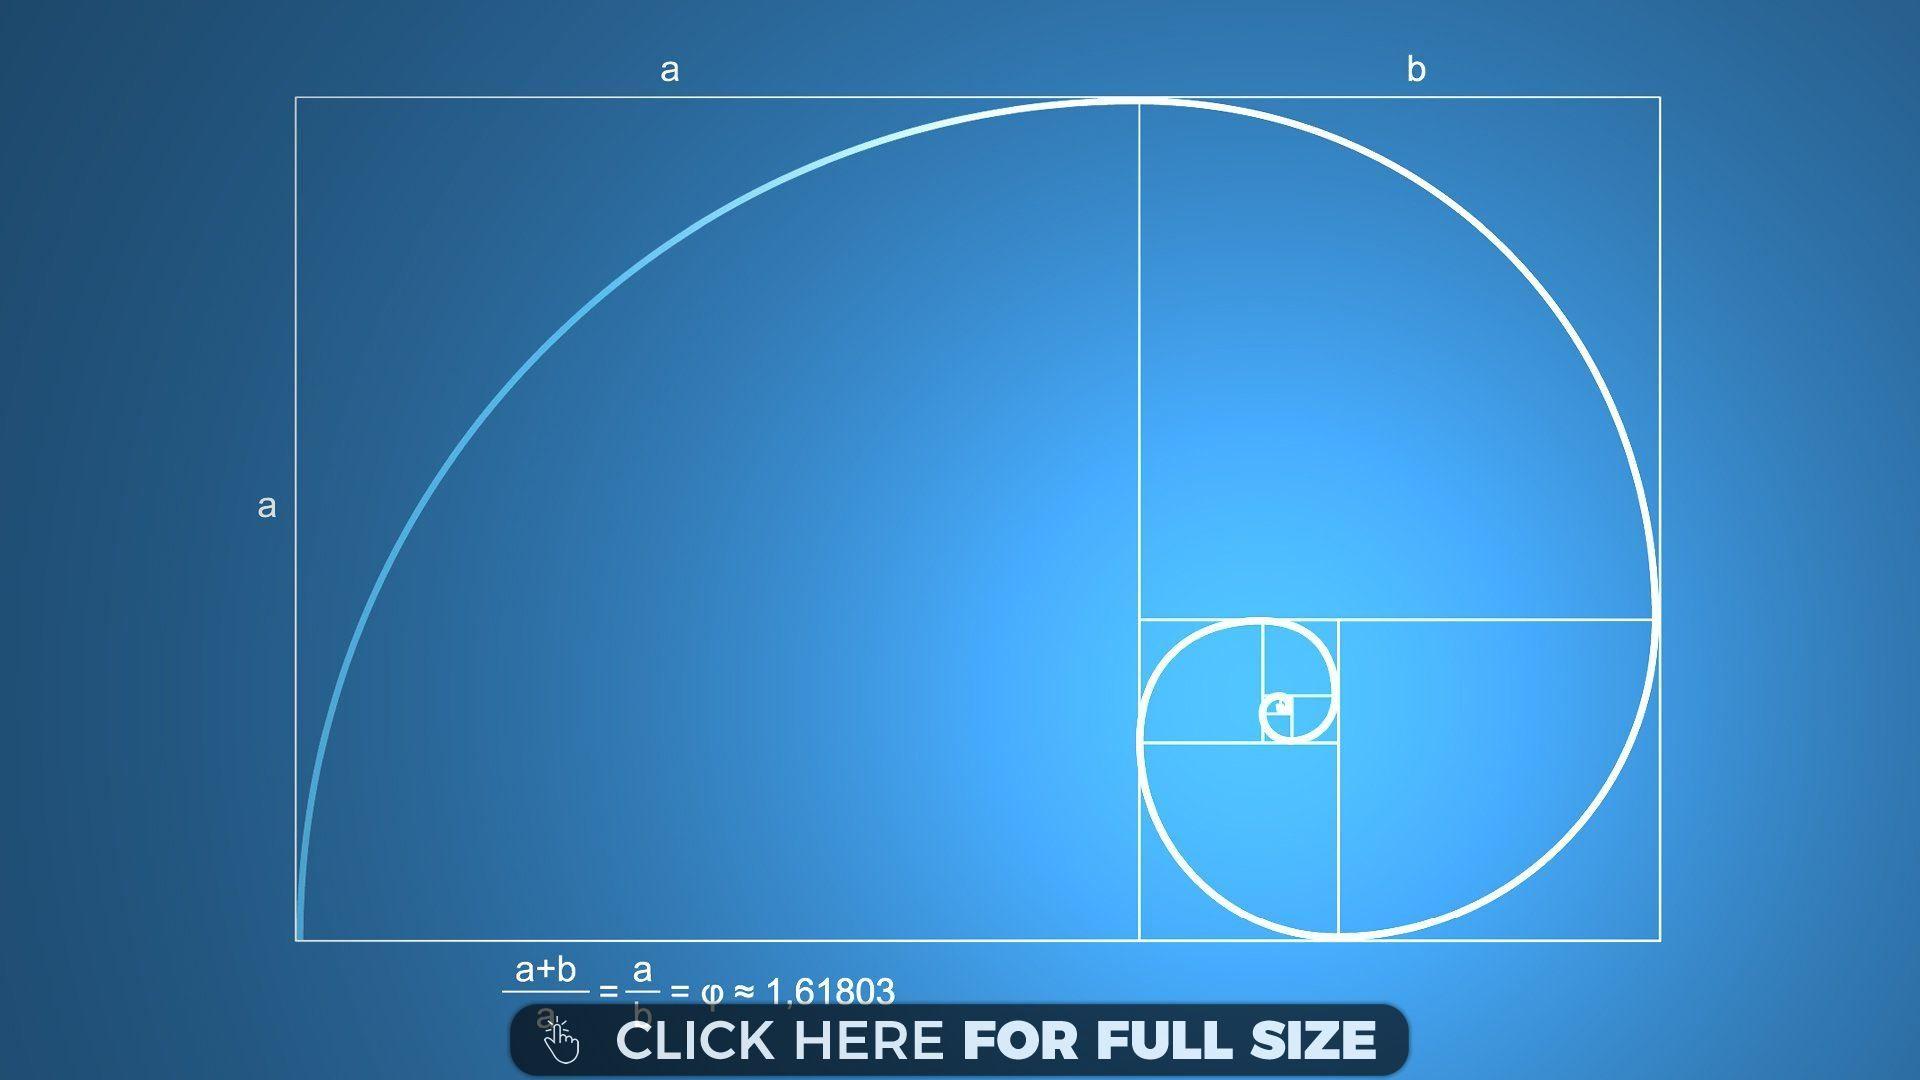 Golden Ratio / Fibonacci Sequence wallpaper. Desktop Wallpaper